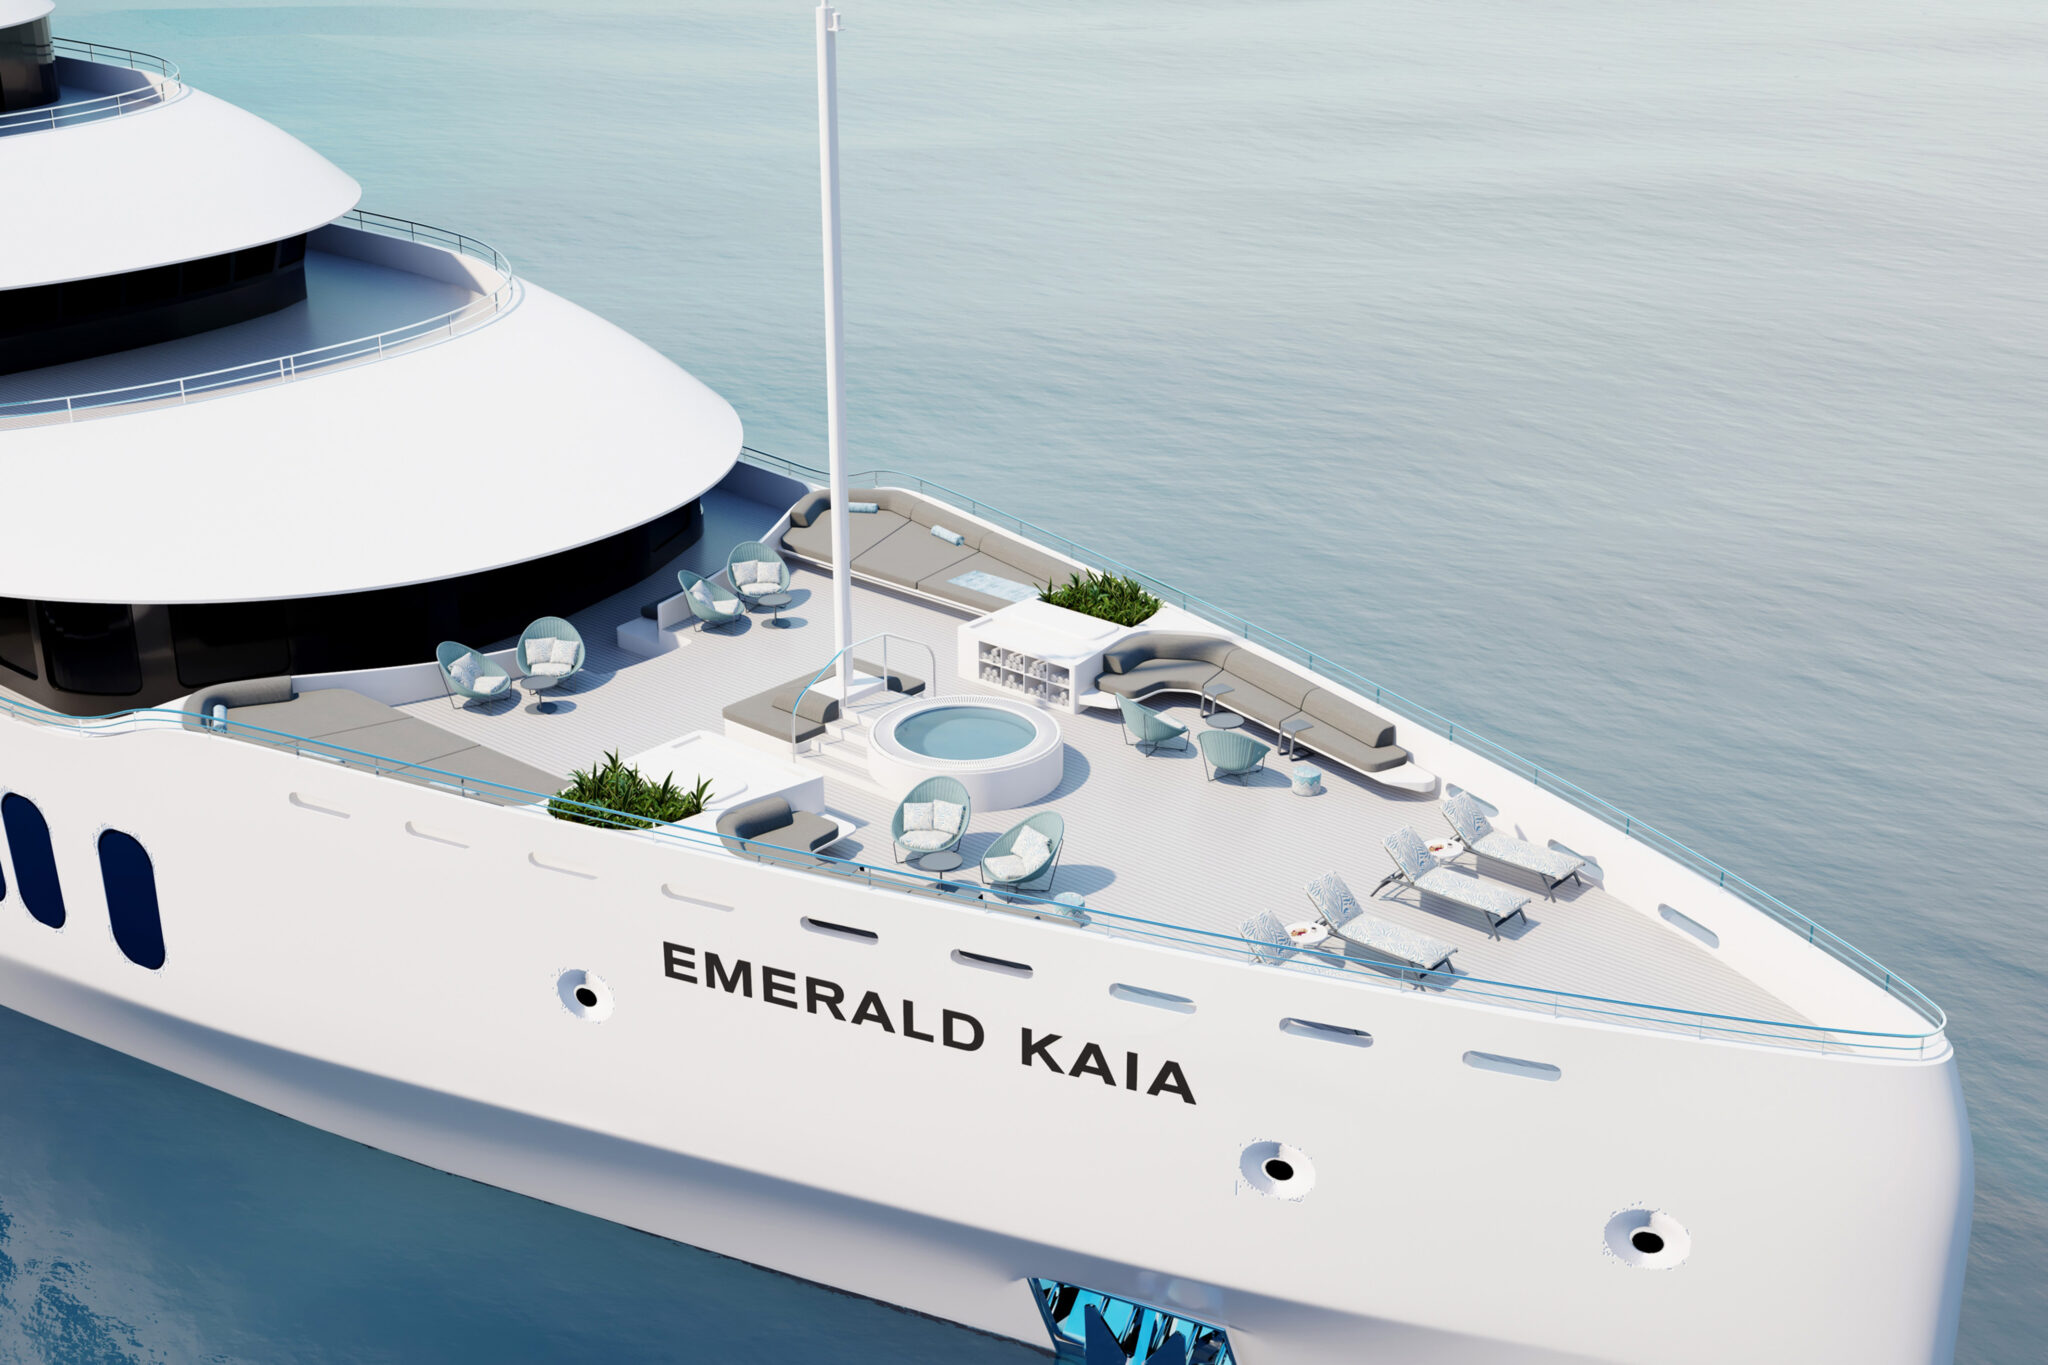 scenic group unveils emerald cruises new luxury yacht emerald kaia